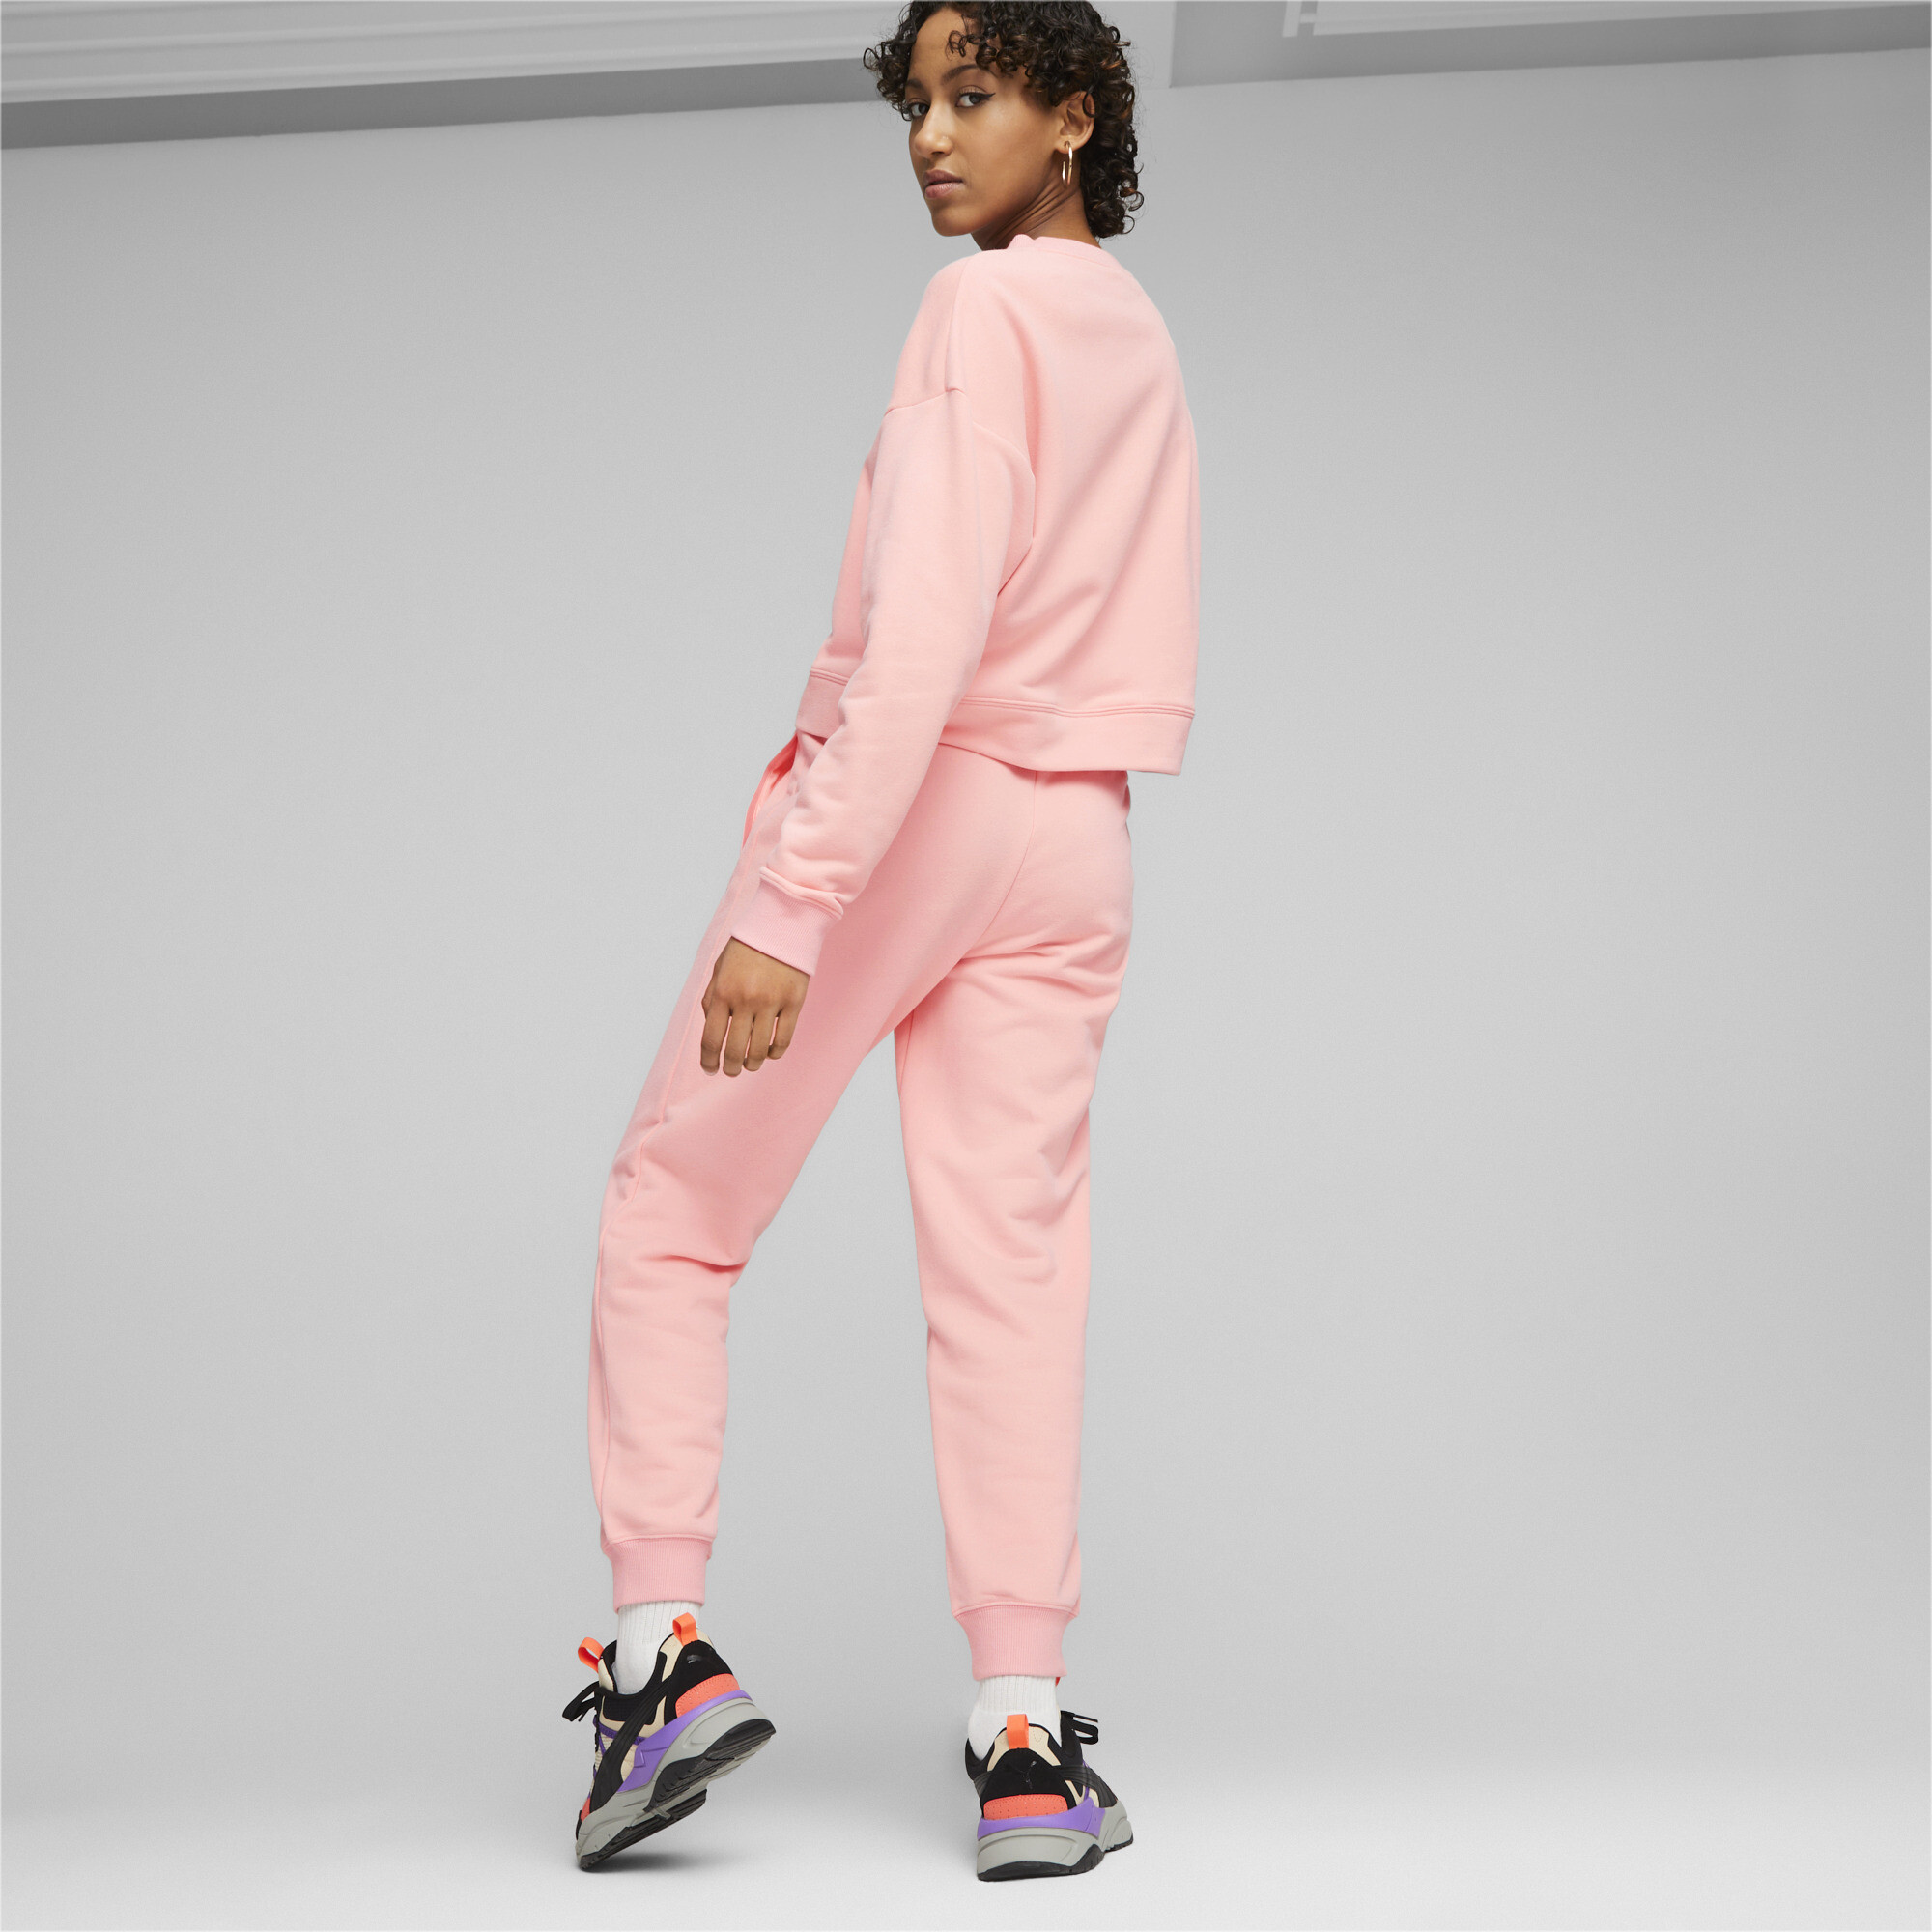 Women's Puma Women's Loungewear Suit, Pink, Size L, Clothing